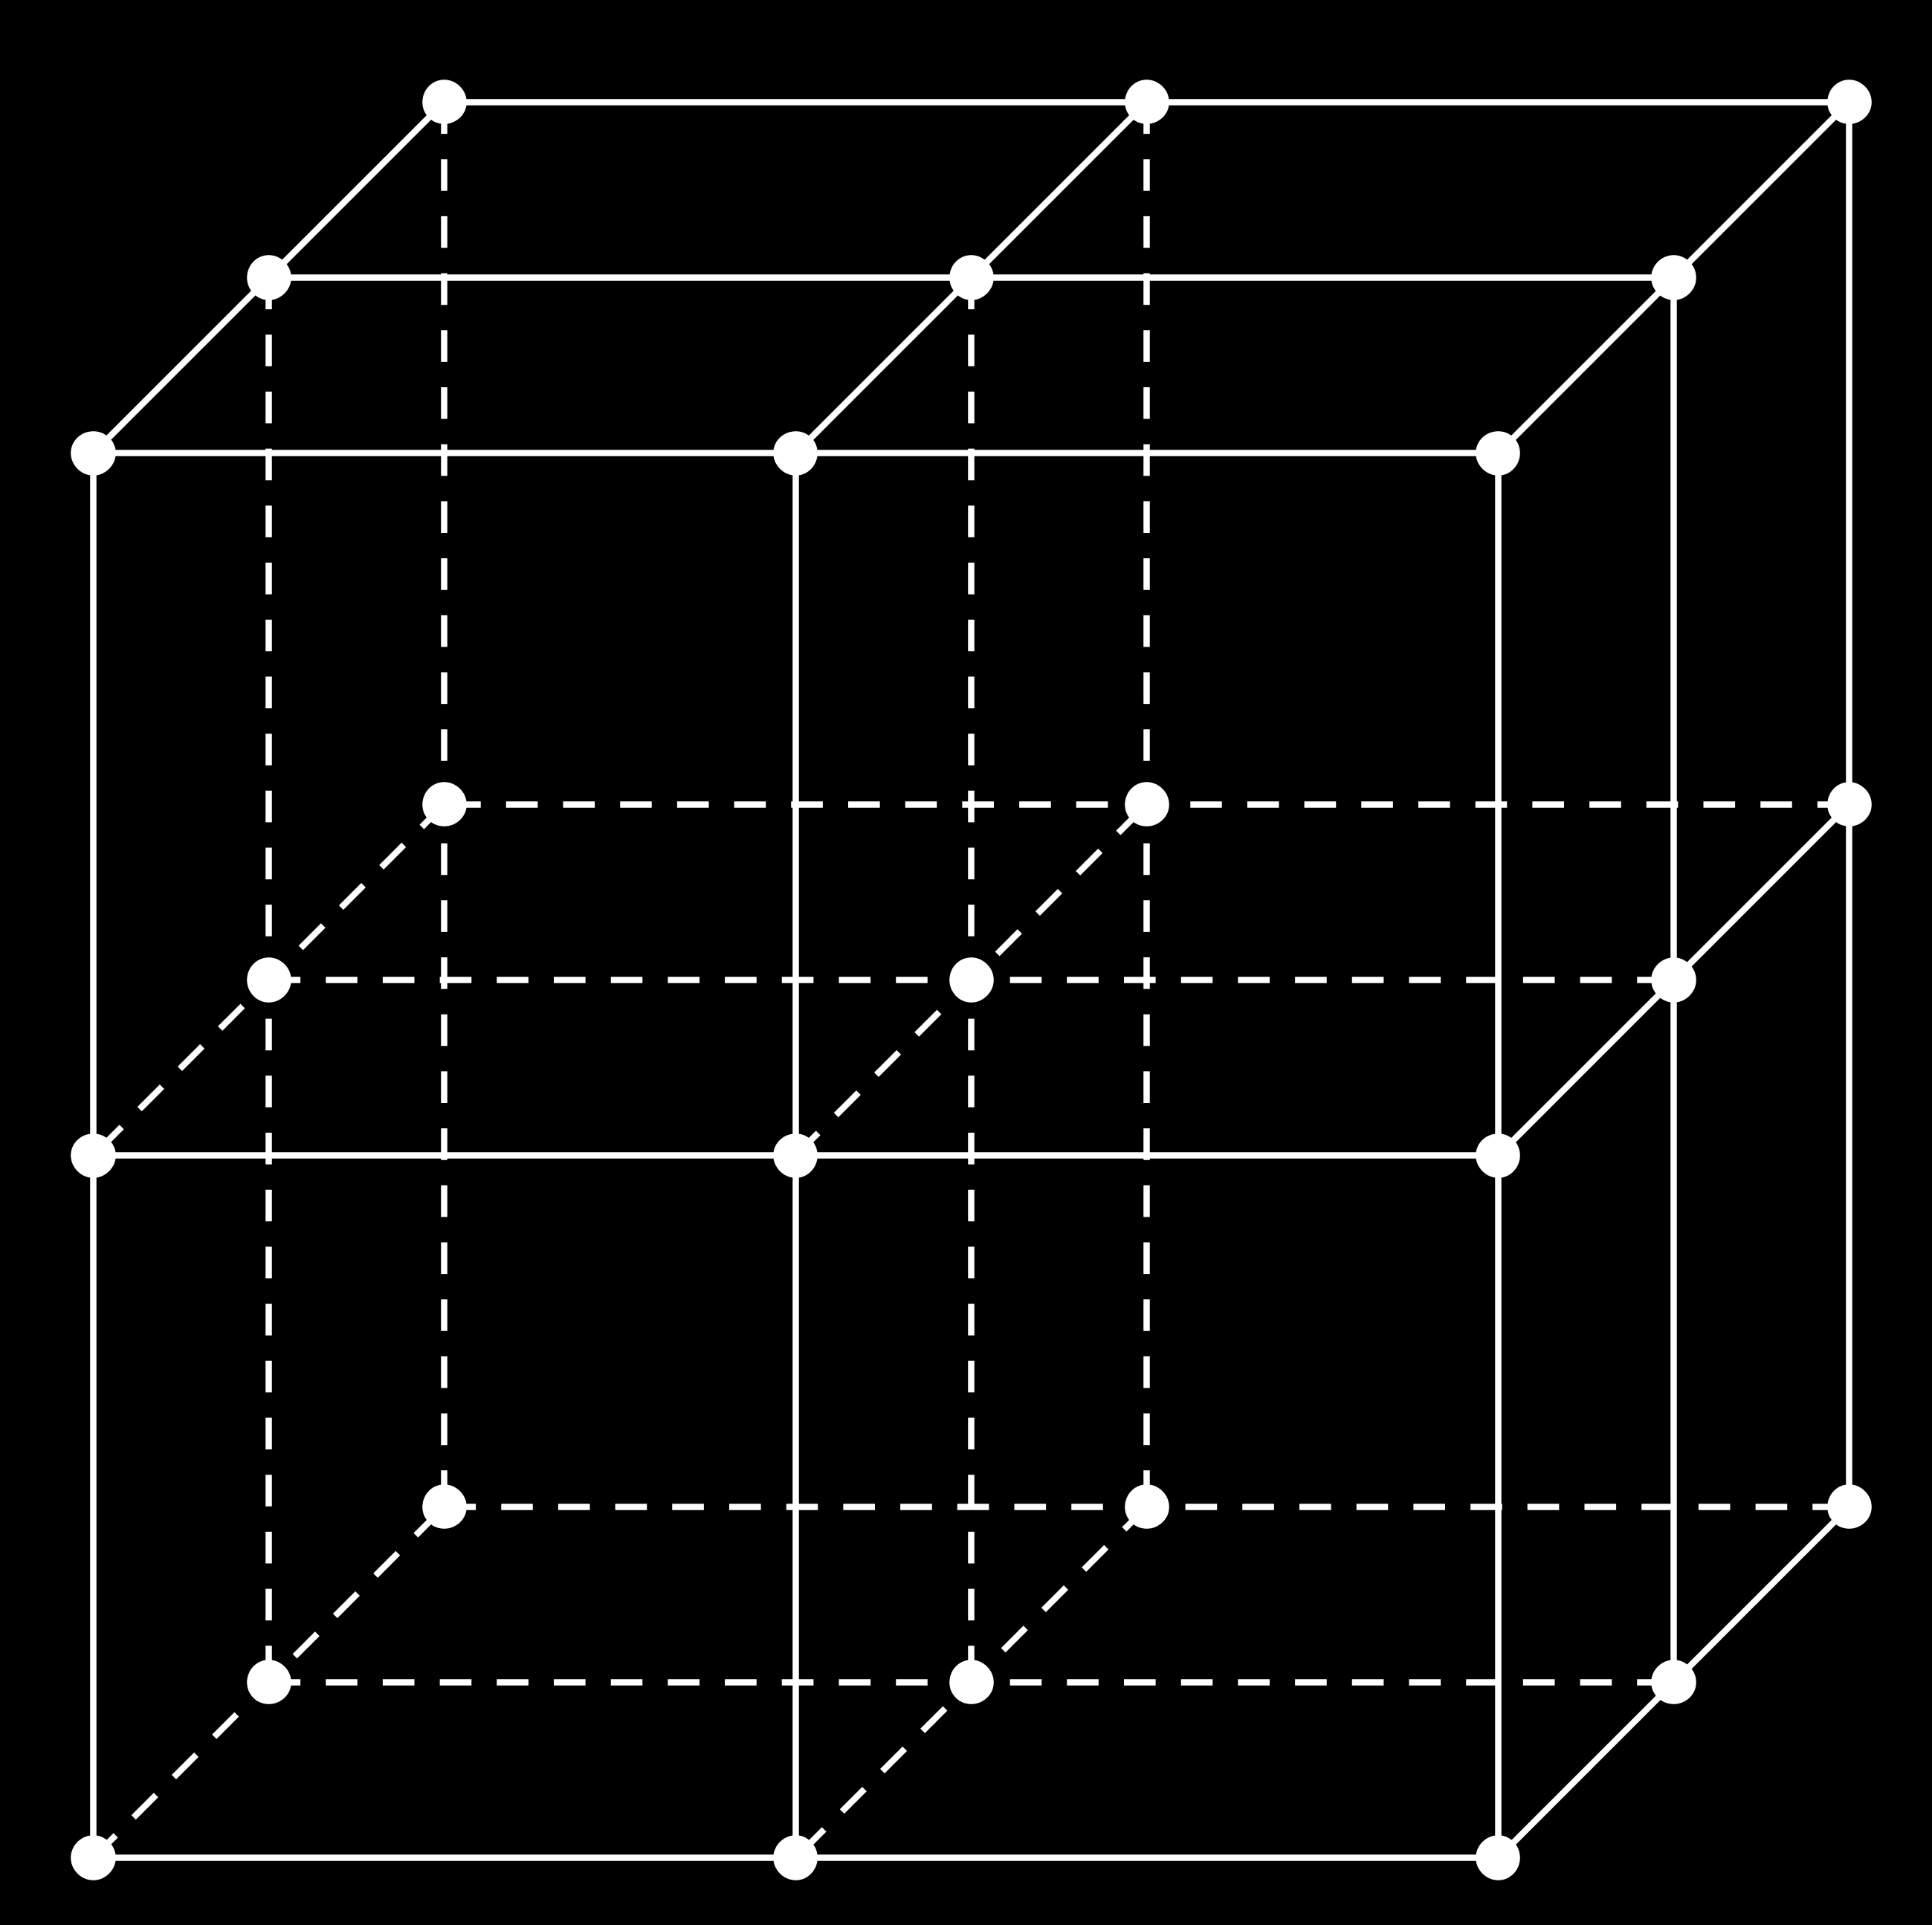 12 CAPÍTULO 2. NOÇÕES SOBRE GRAFOS exemplo, dividamos este cubo em oito cubos menores seccionando cada aresta ao meio, conforme ilustrado abaixo.